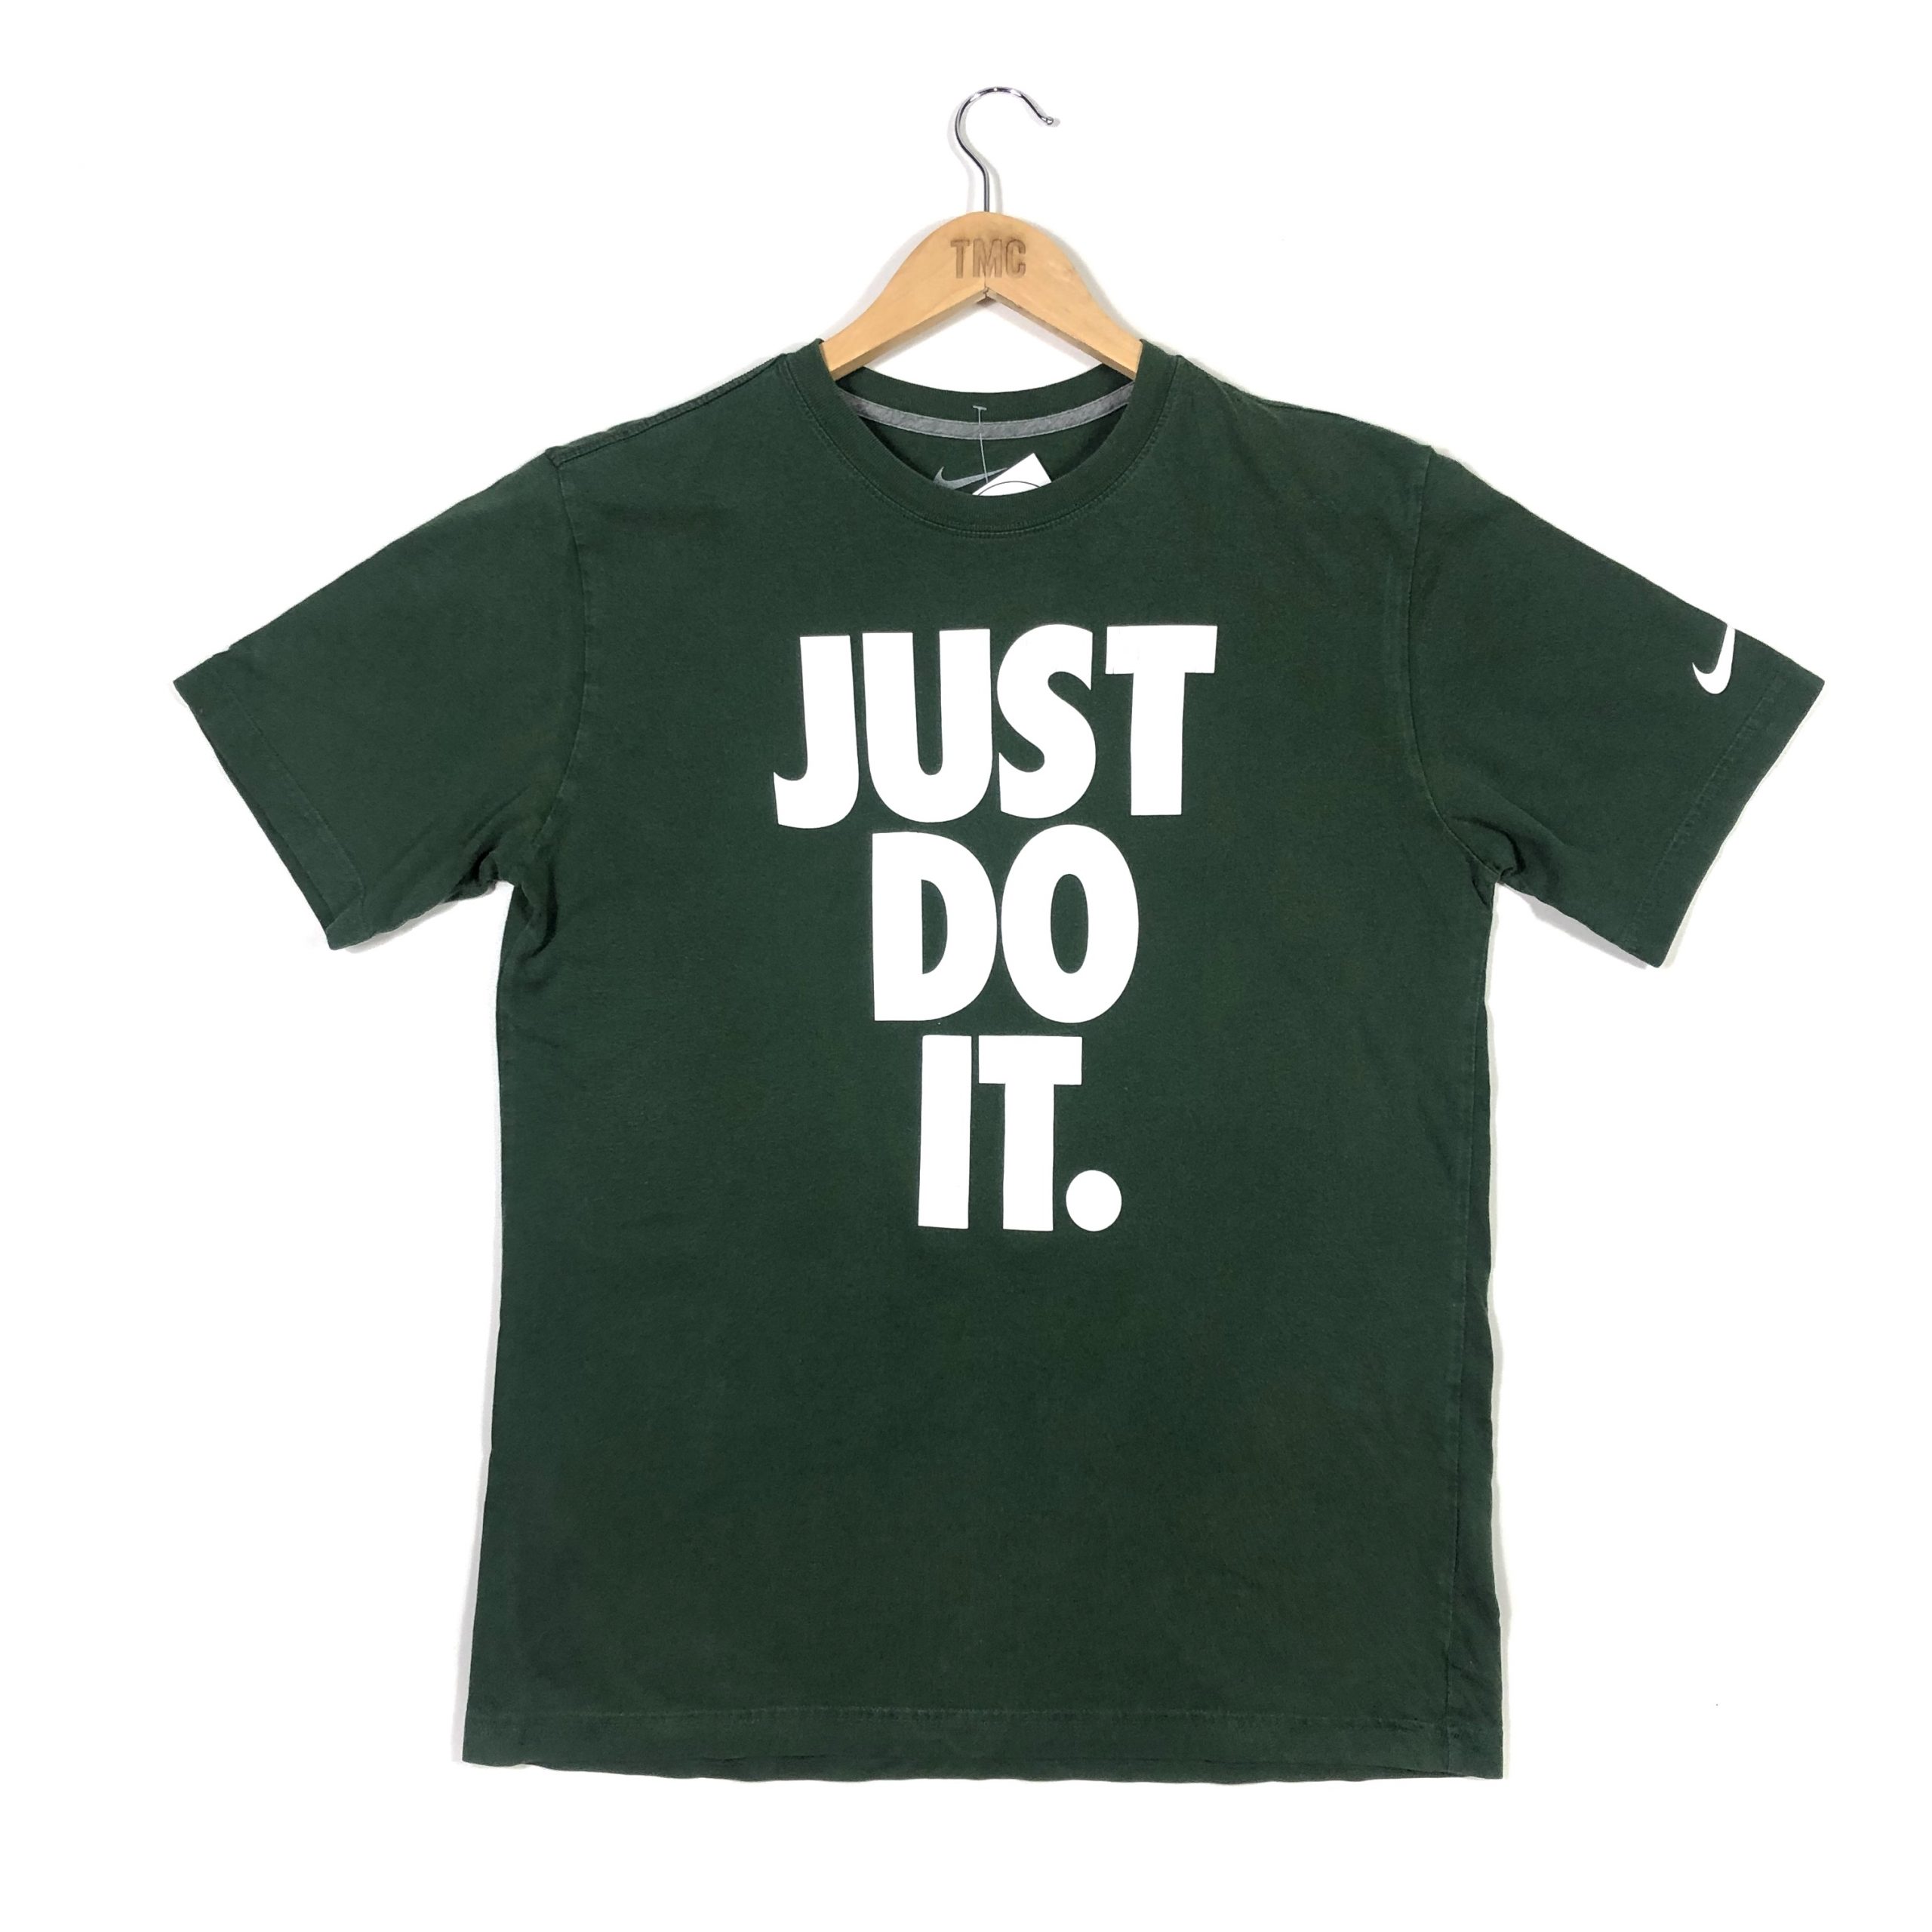 Nike 'Just Do It' T-Shirt - Green - L - TMC Vintage - Vintage Clothing